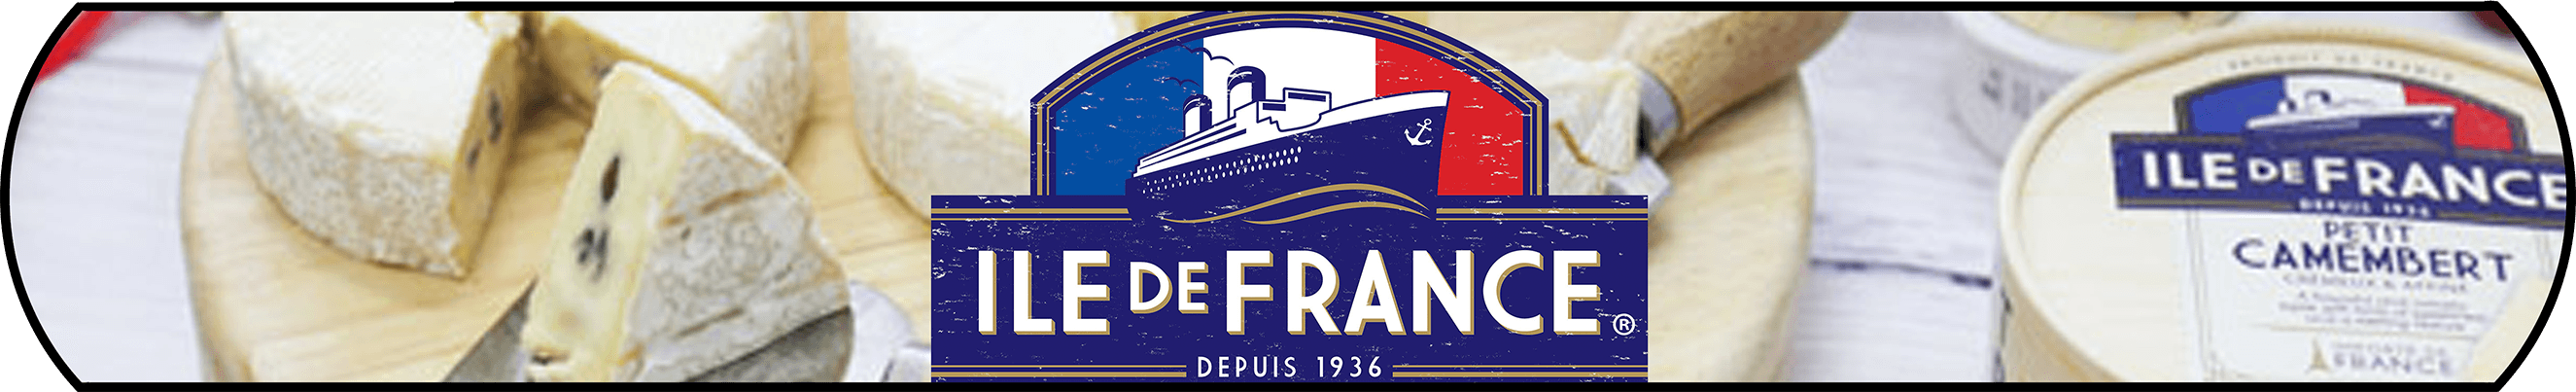 Ile de France Cheeses Banner